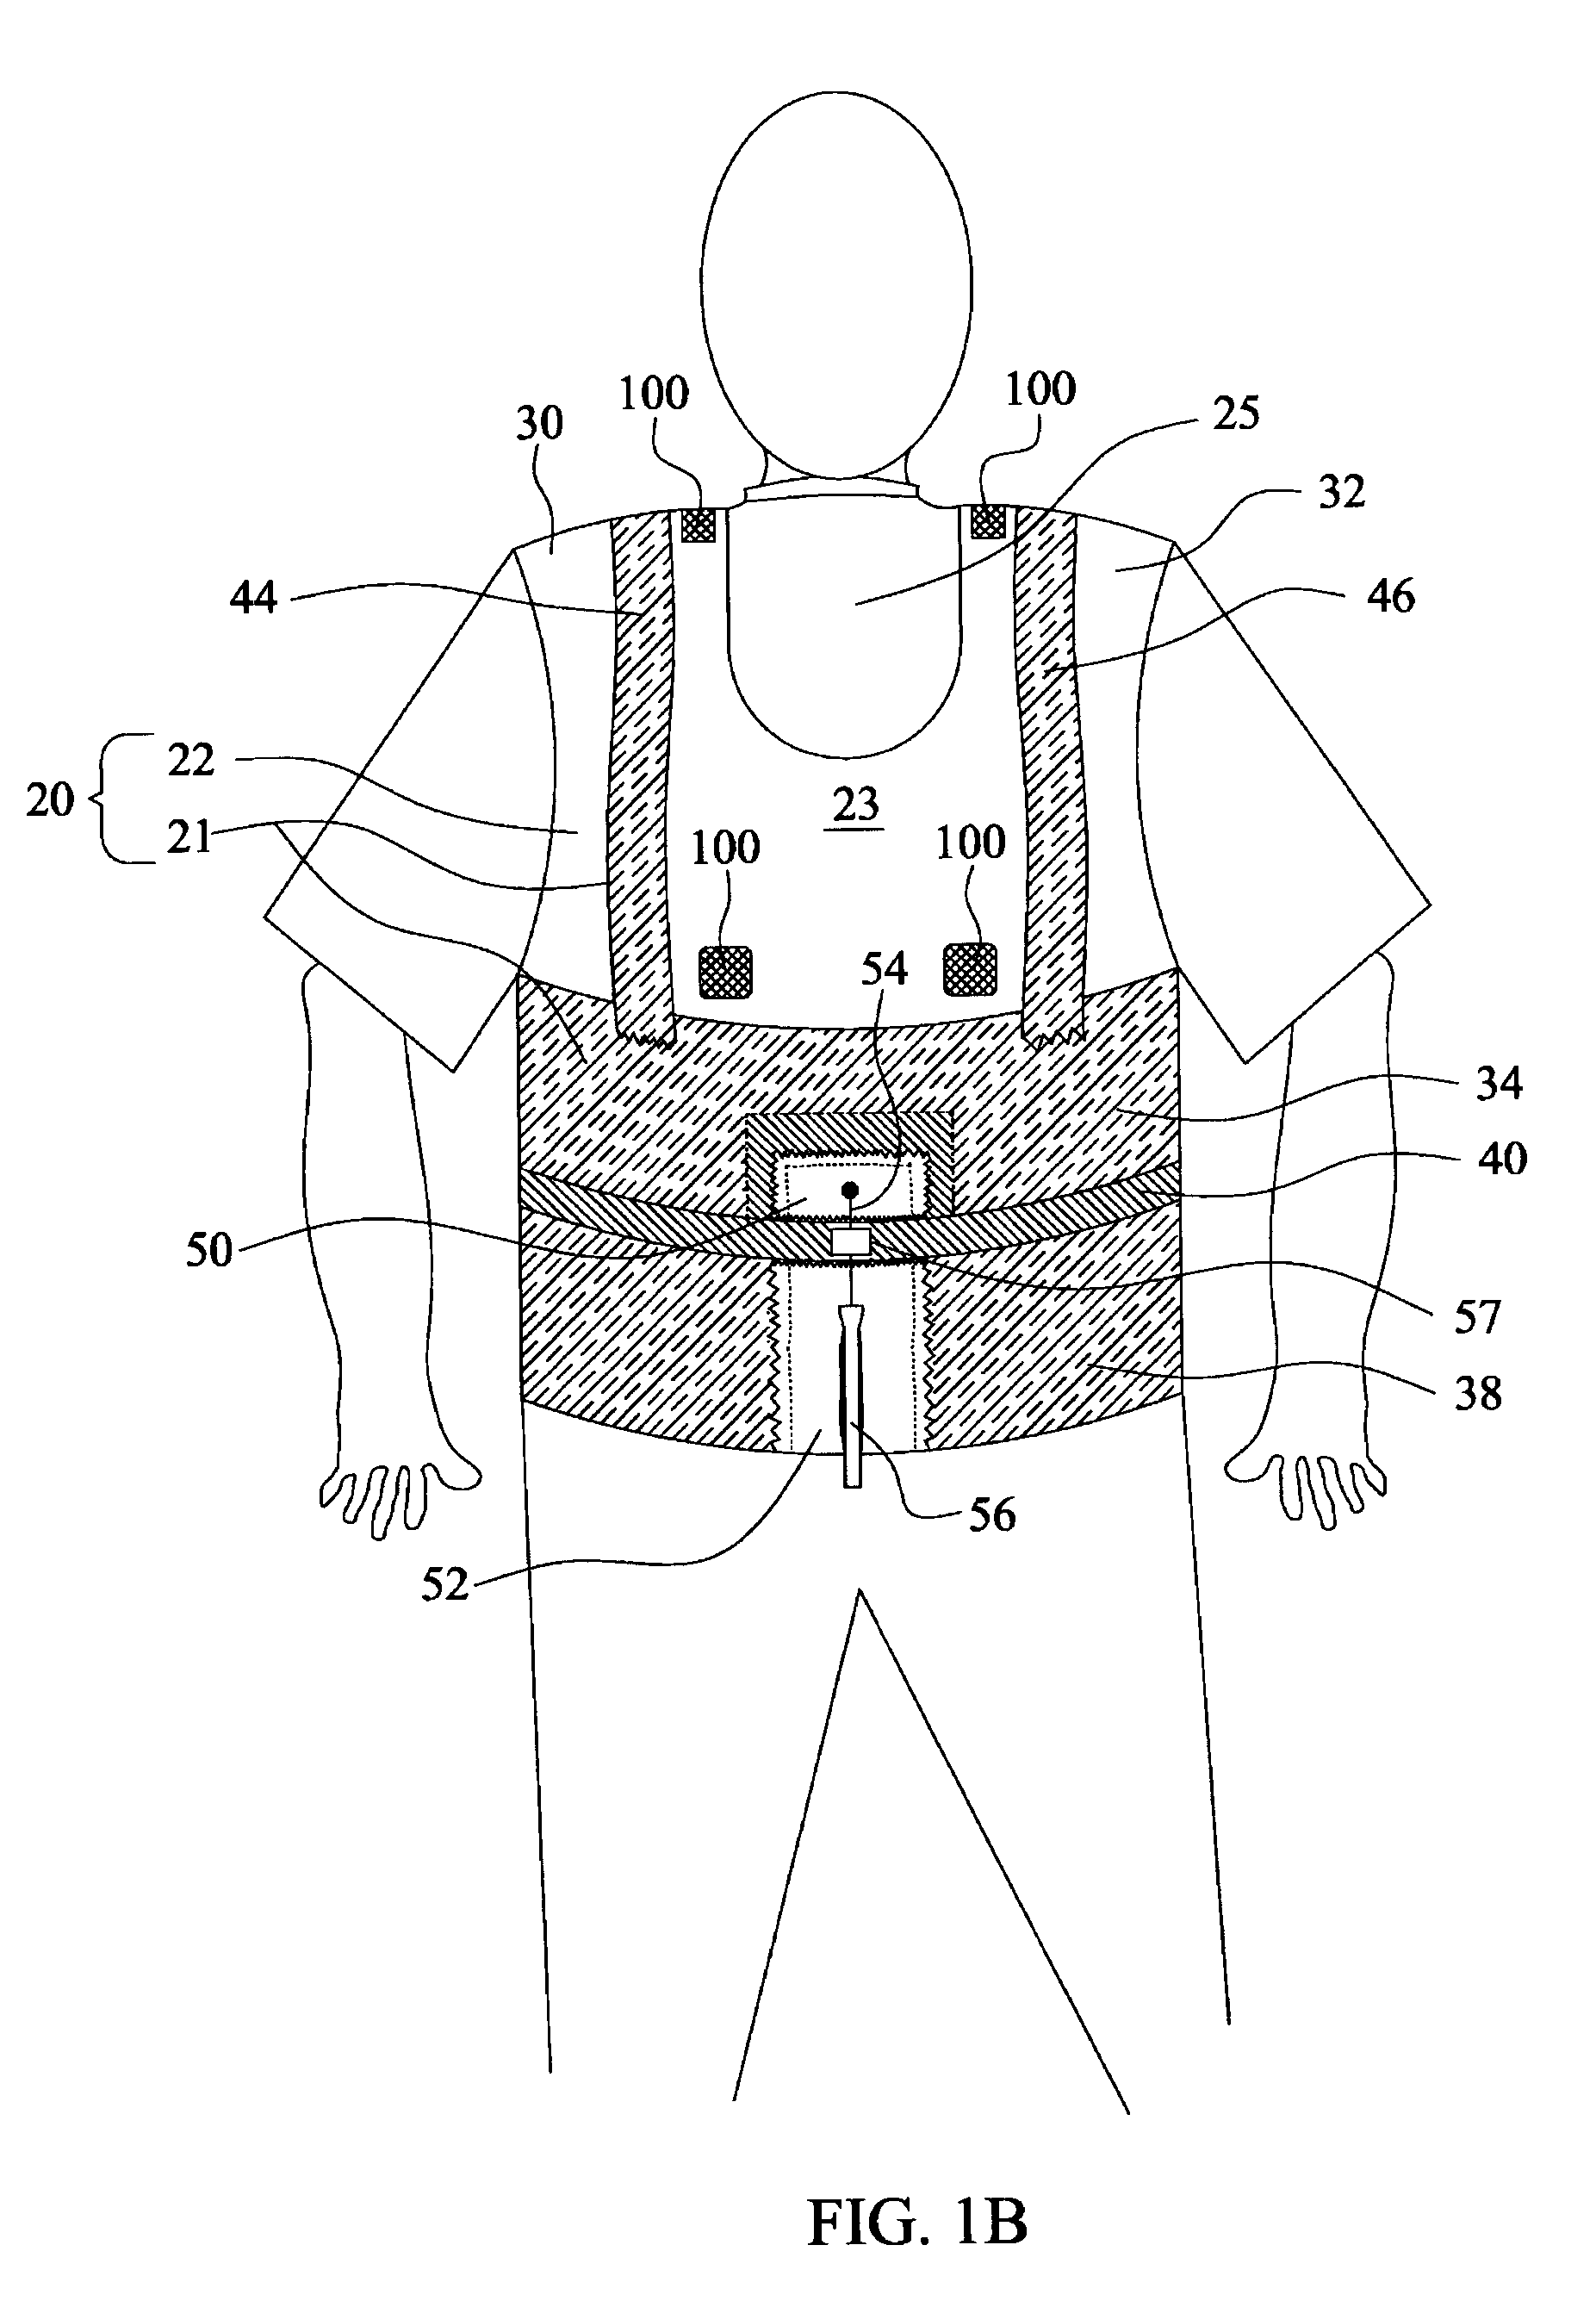 Ultra-broadband antenna incorporated into a garment